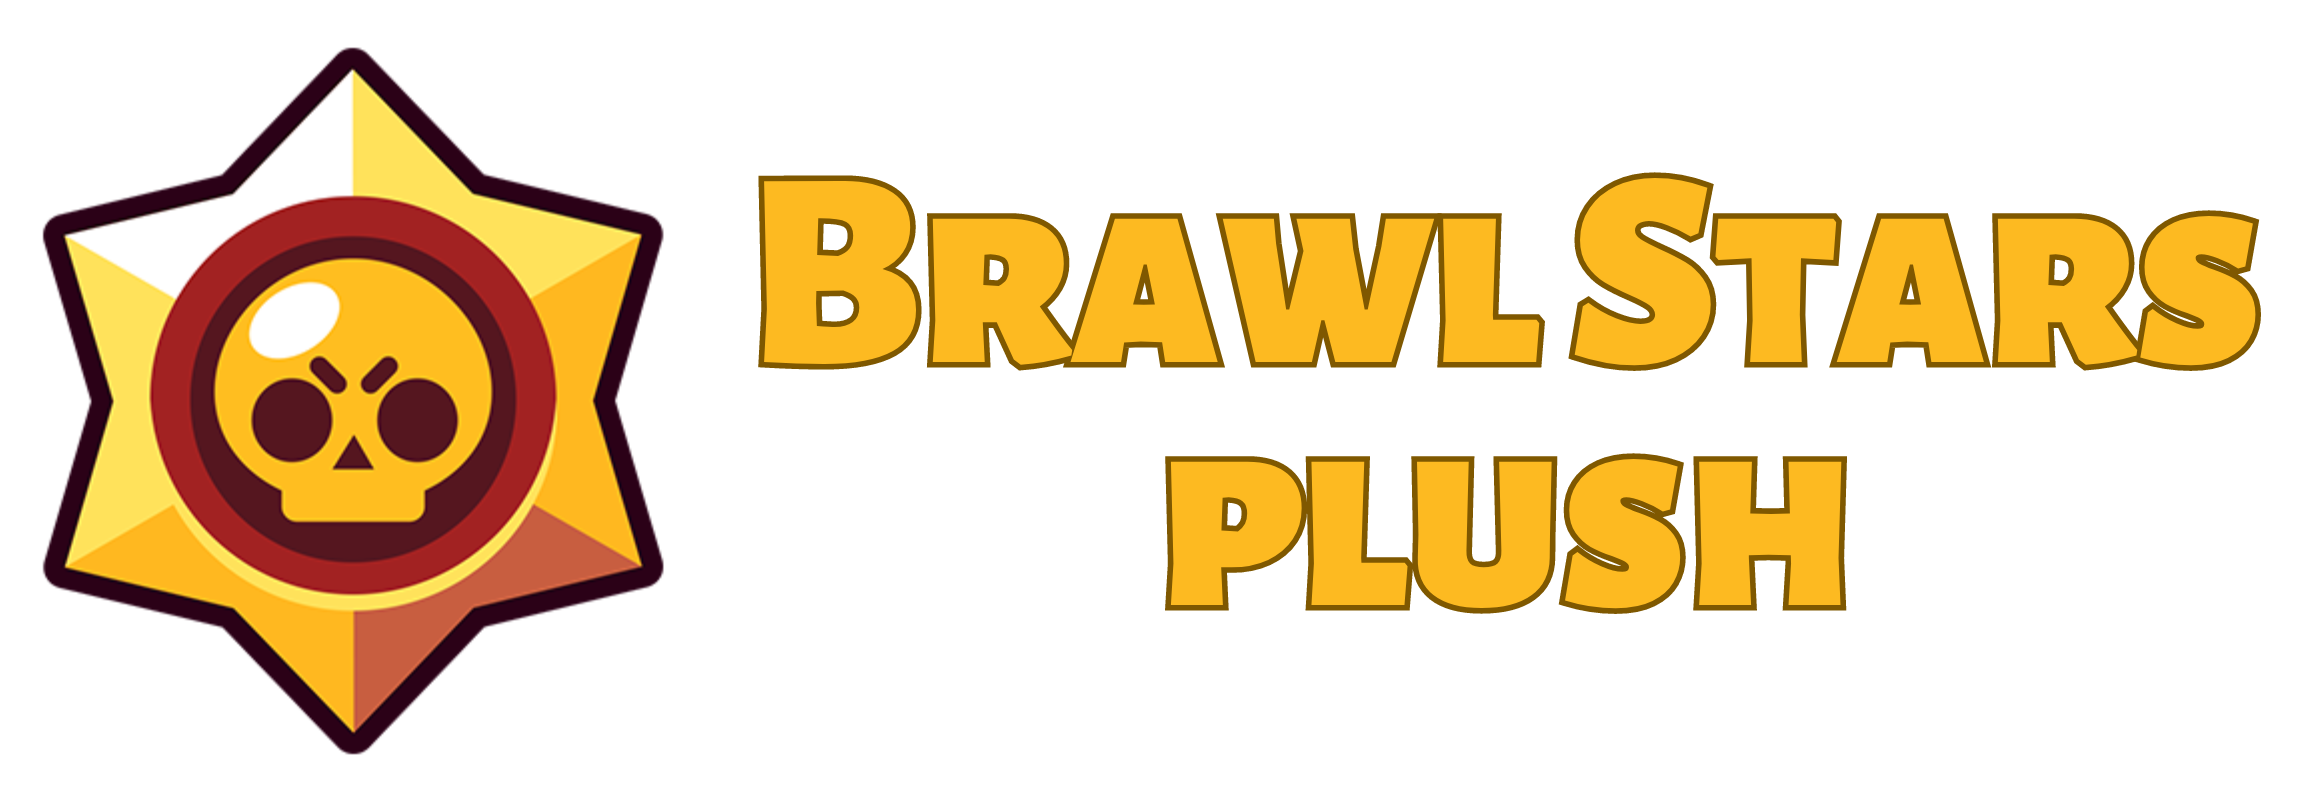 Brawl Stars plush logo - Brawl Stars Plush